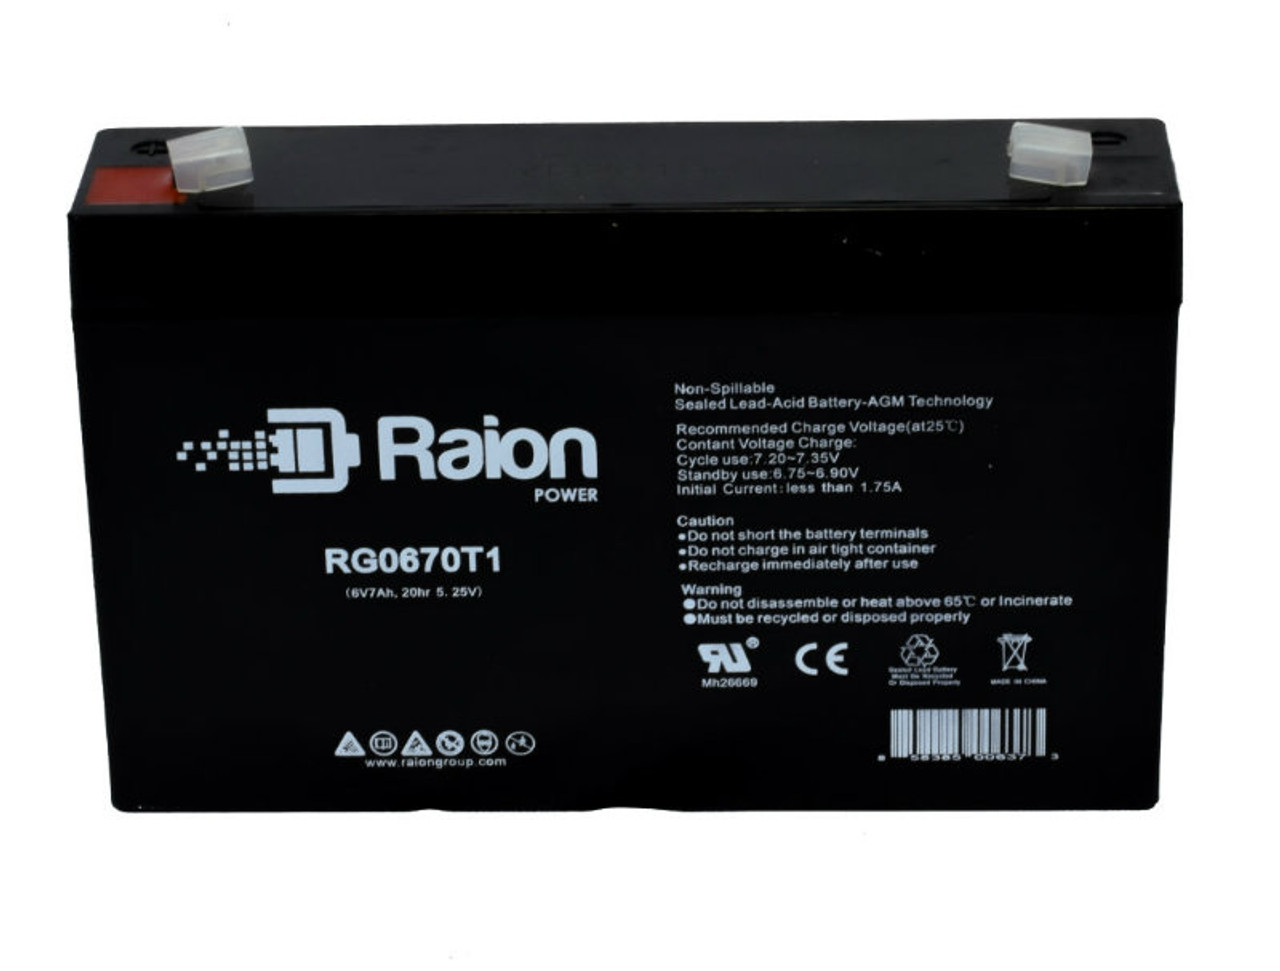 Raion Power RG0670T1 Replacement Battery Cartridge for Fisher-Price Power Wheels W6214 Kawasaki ATV